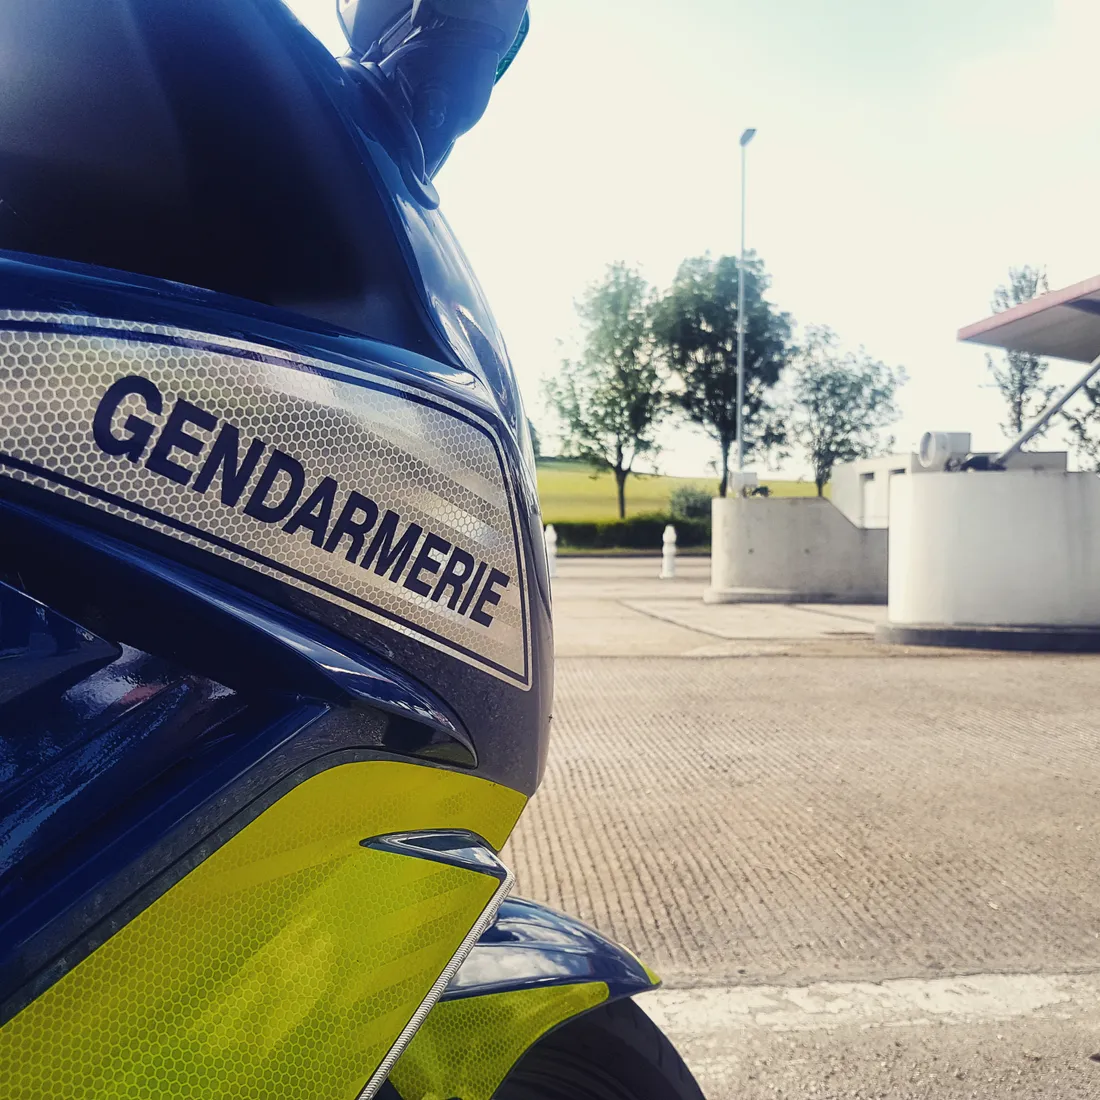 Une moto de gendarmerie, illustration